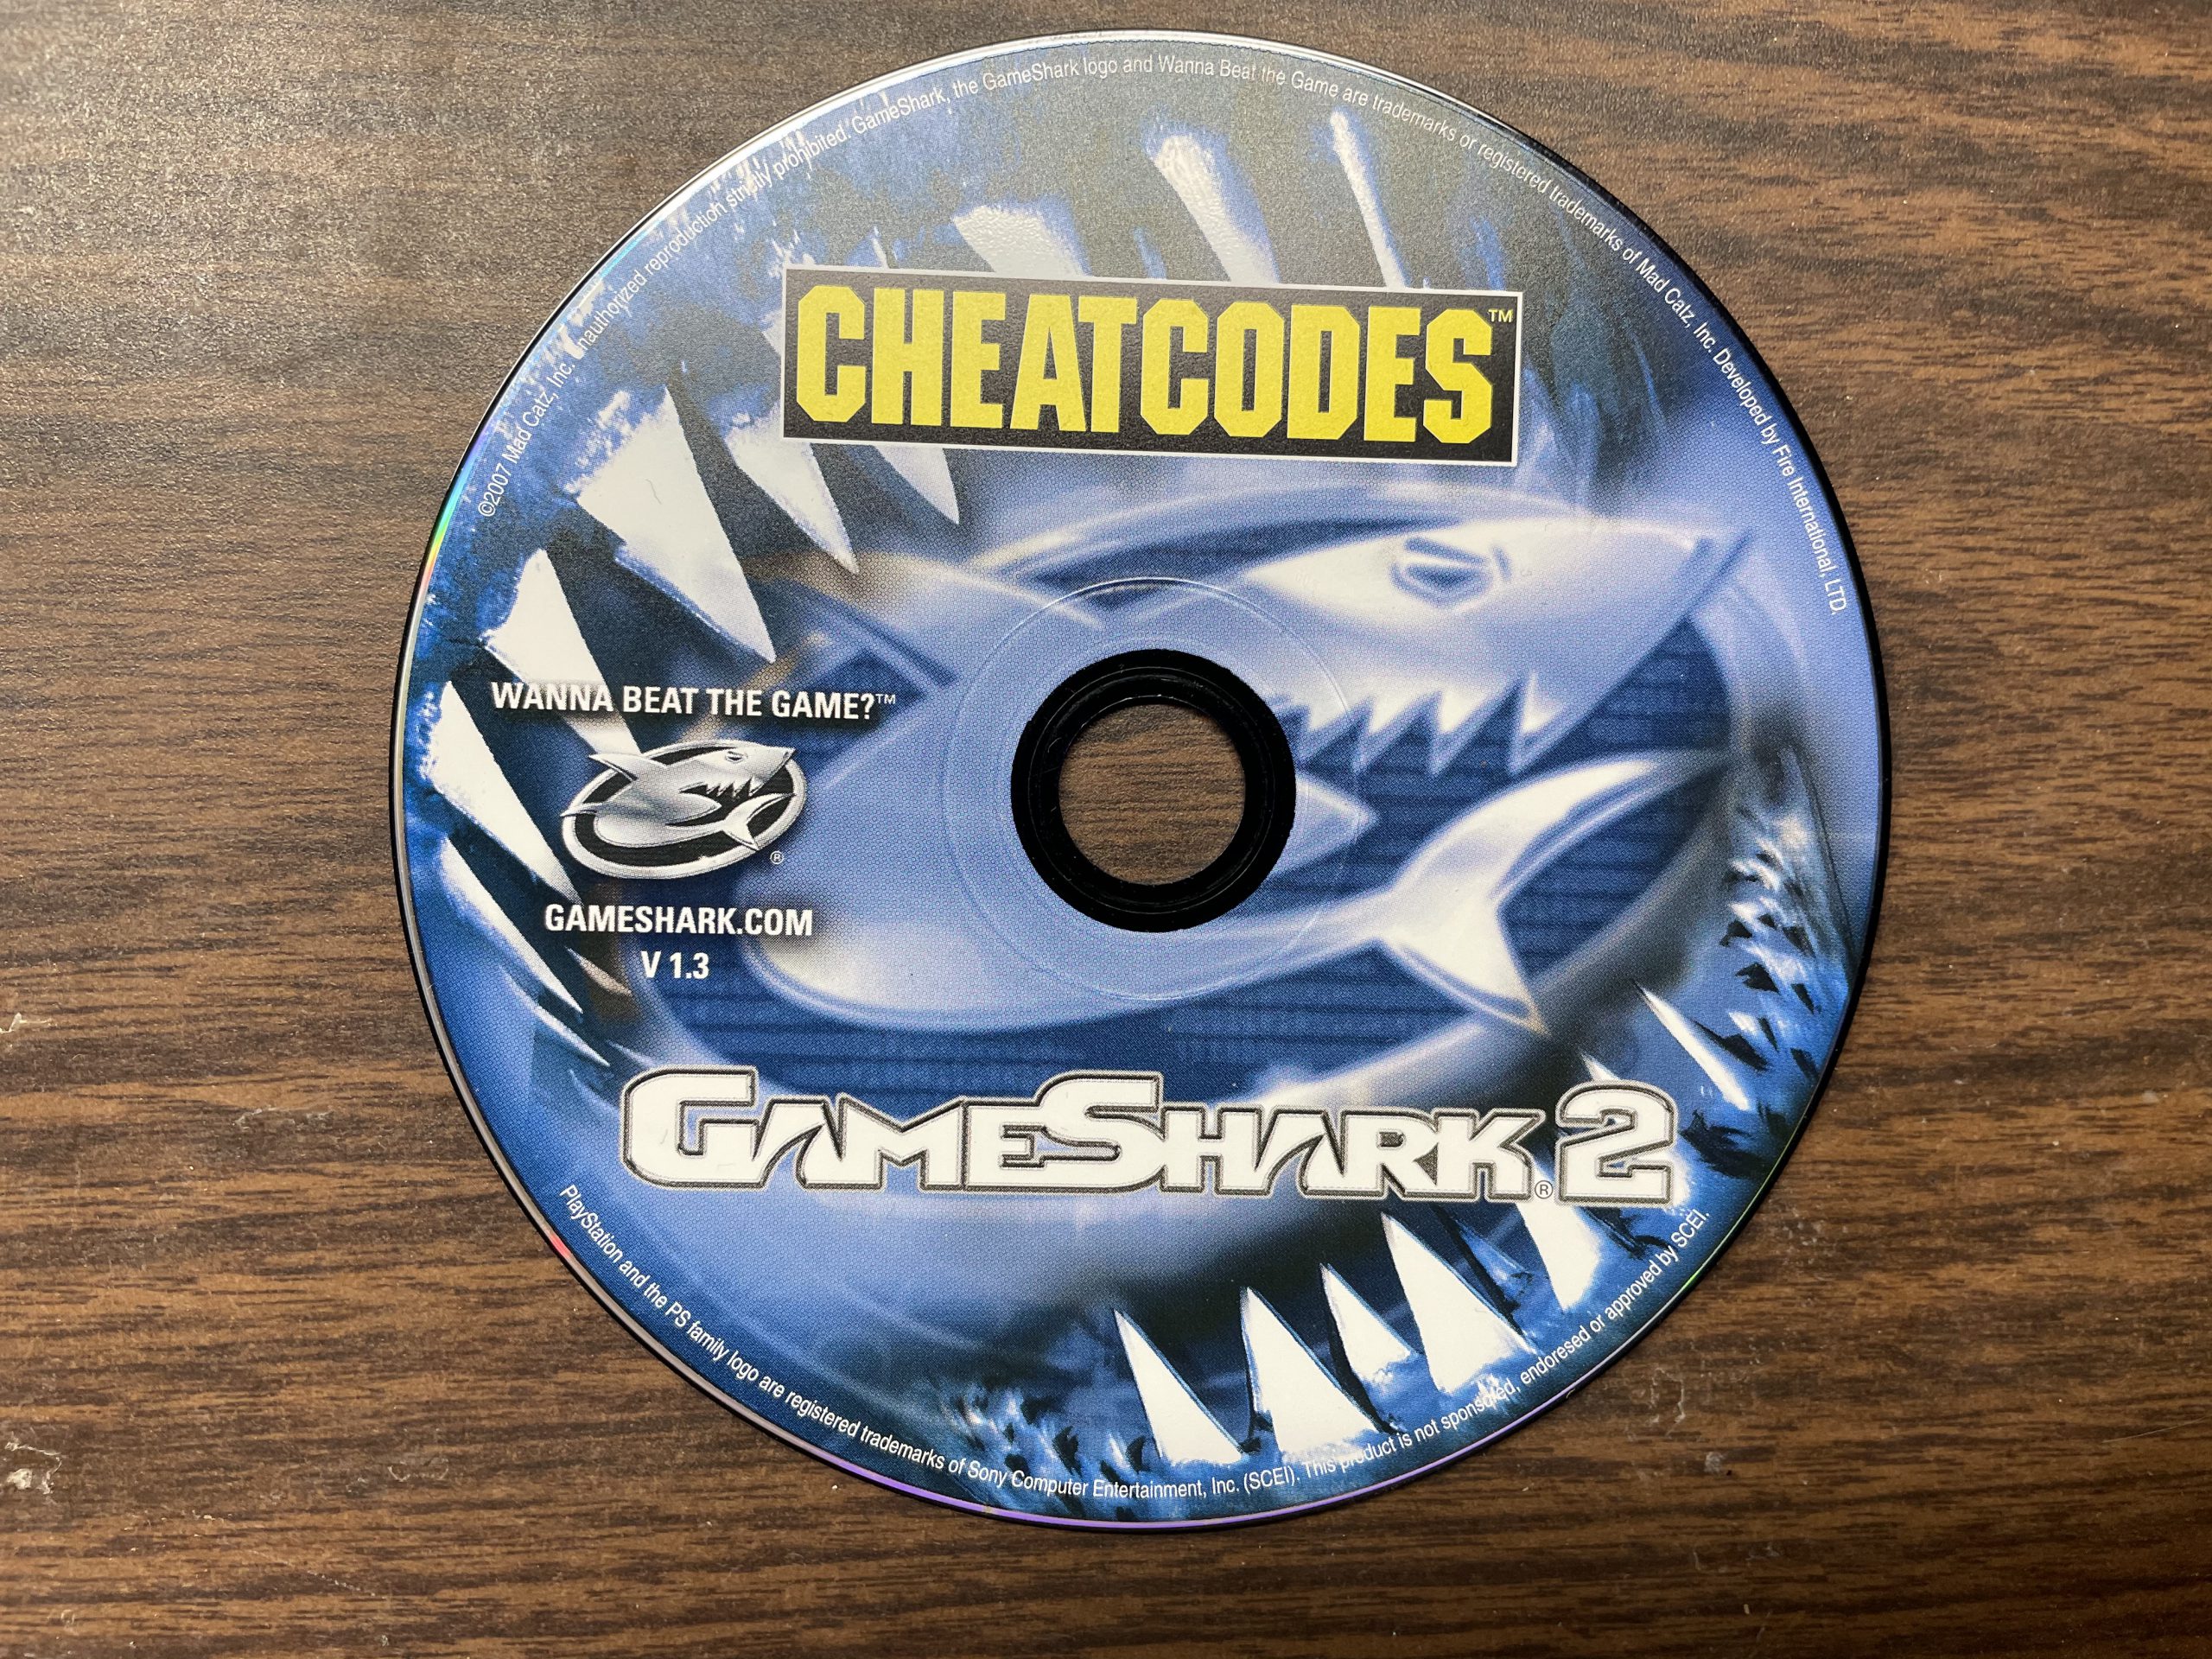 PS2]Gameshark 2 Ver 4, Game Shark serve para vc fazer trap…